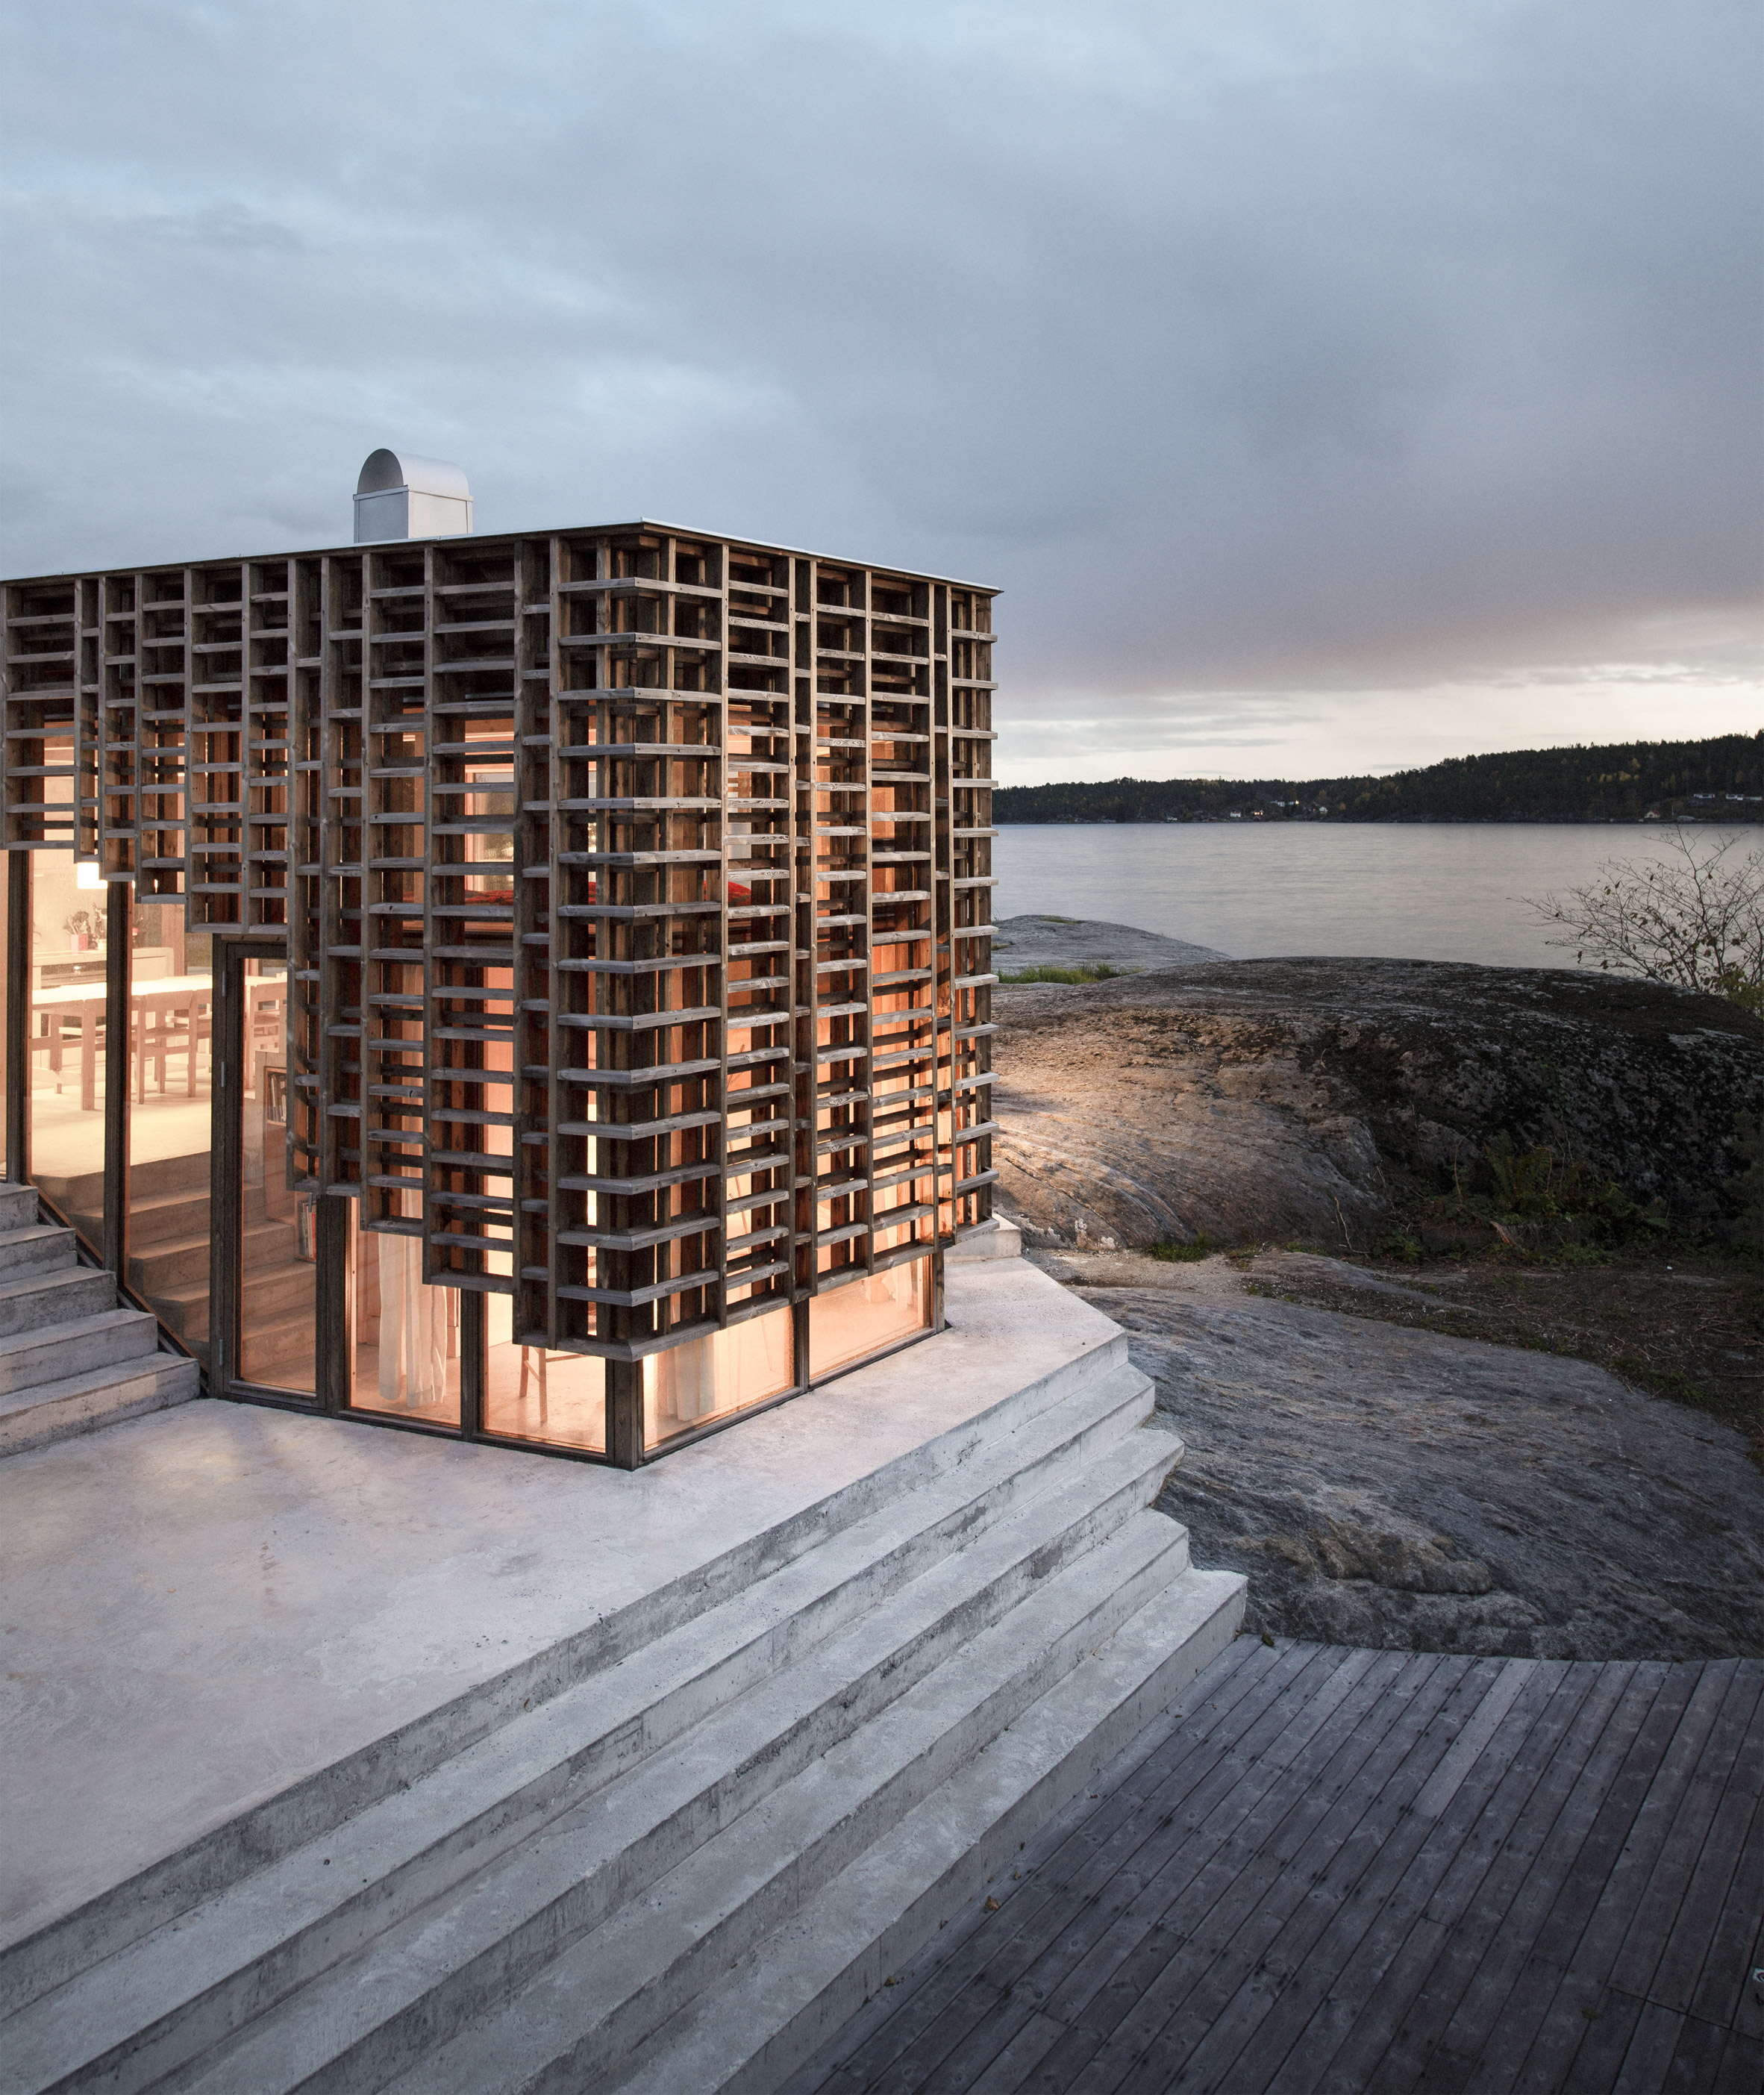 House on an Island by Atelier Oslo